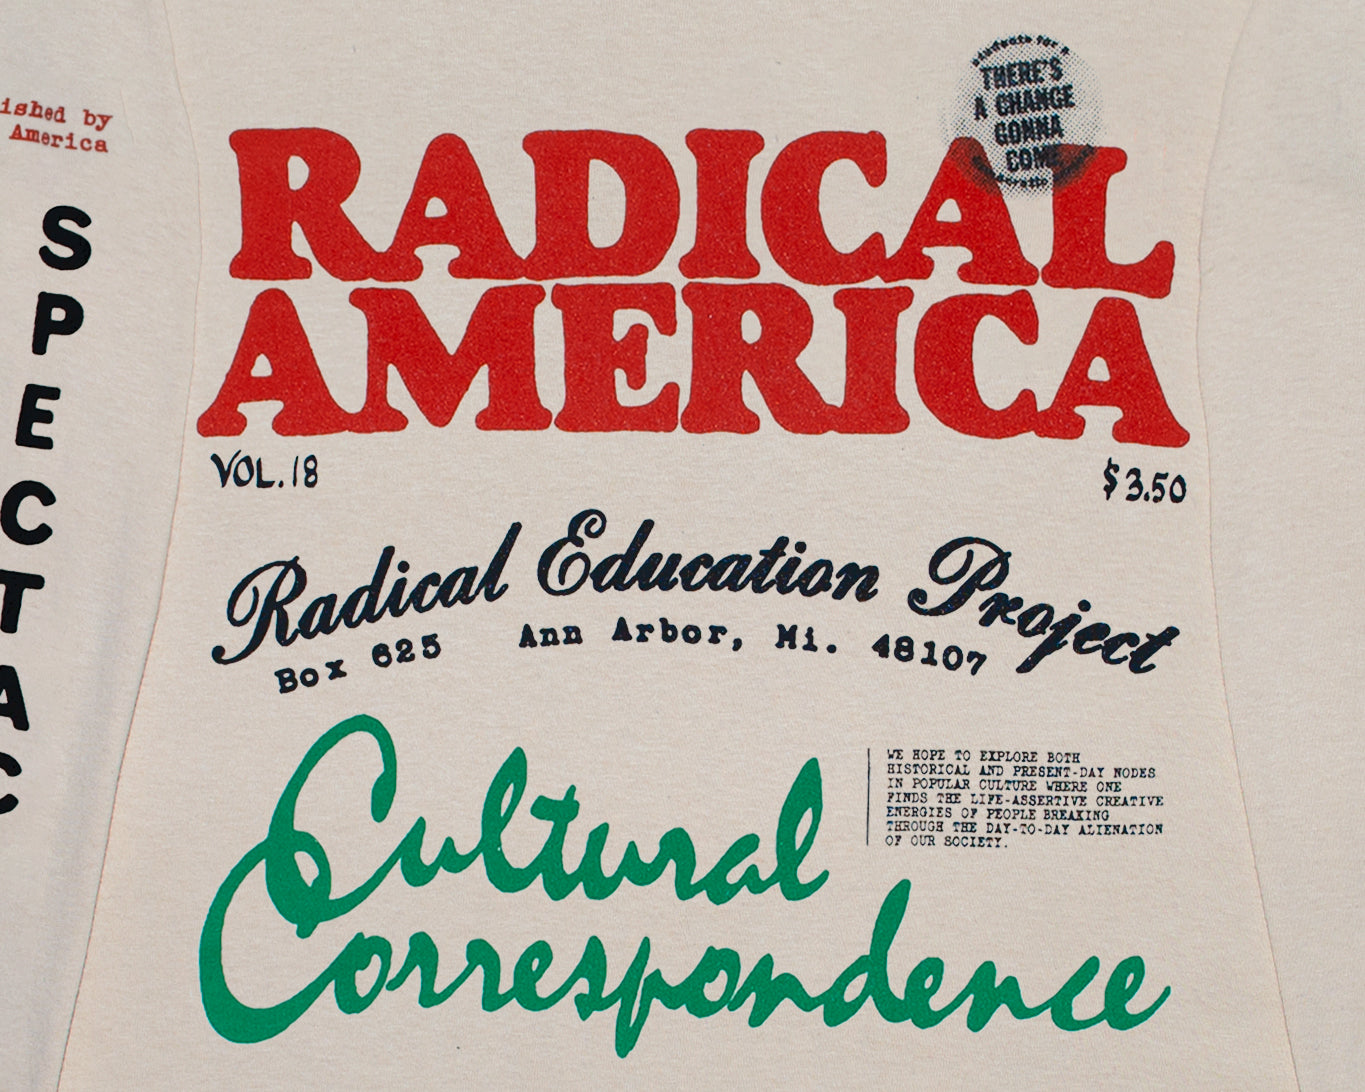 Radical America